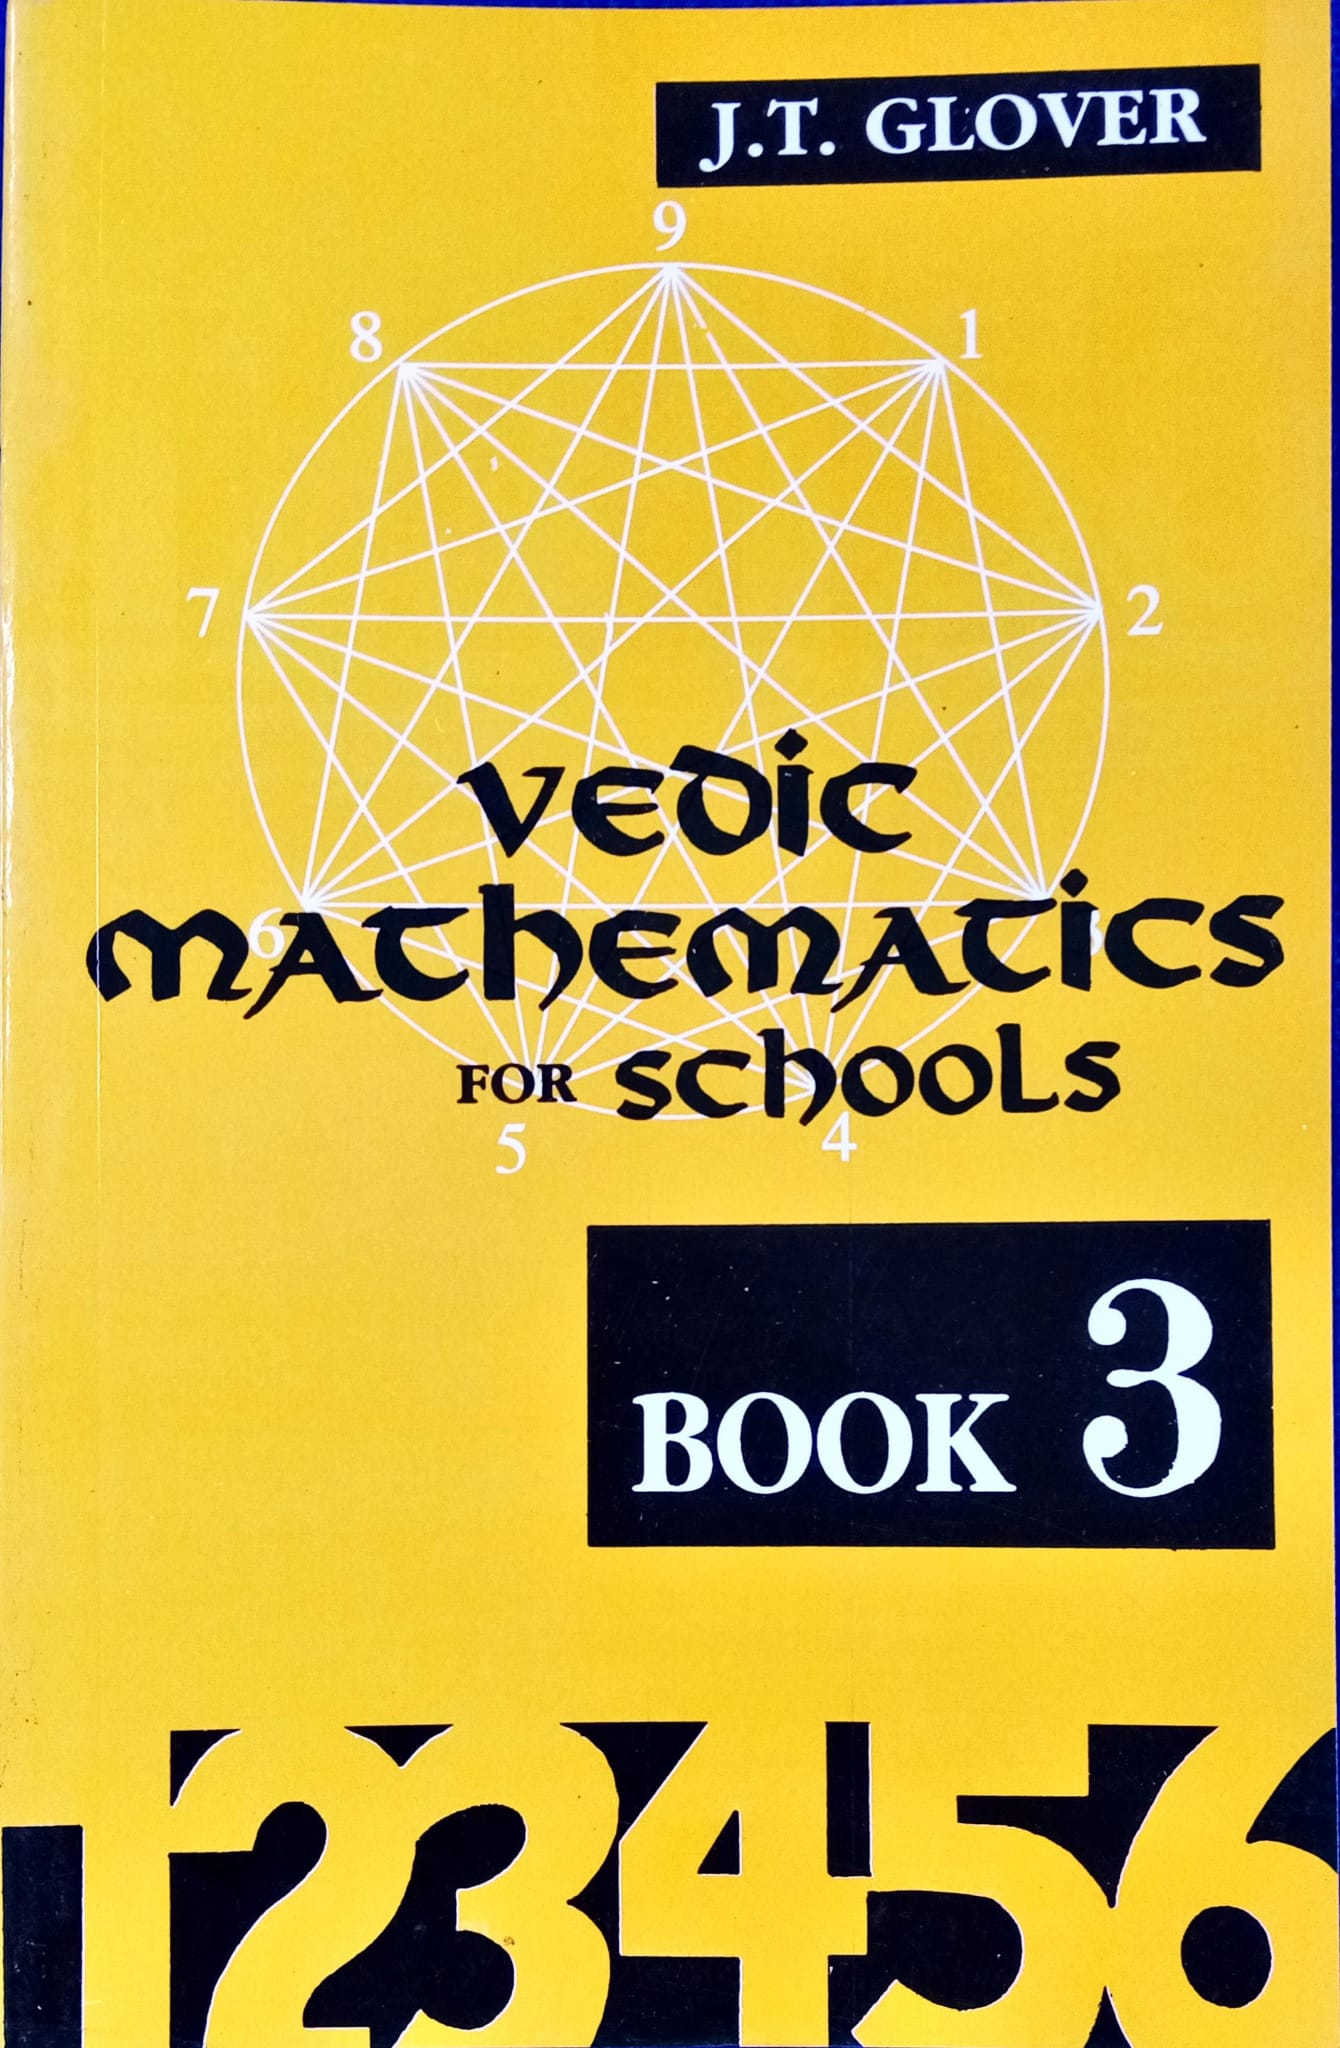 Vedic Mathematics for schools BOOK 1